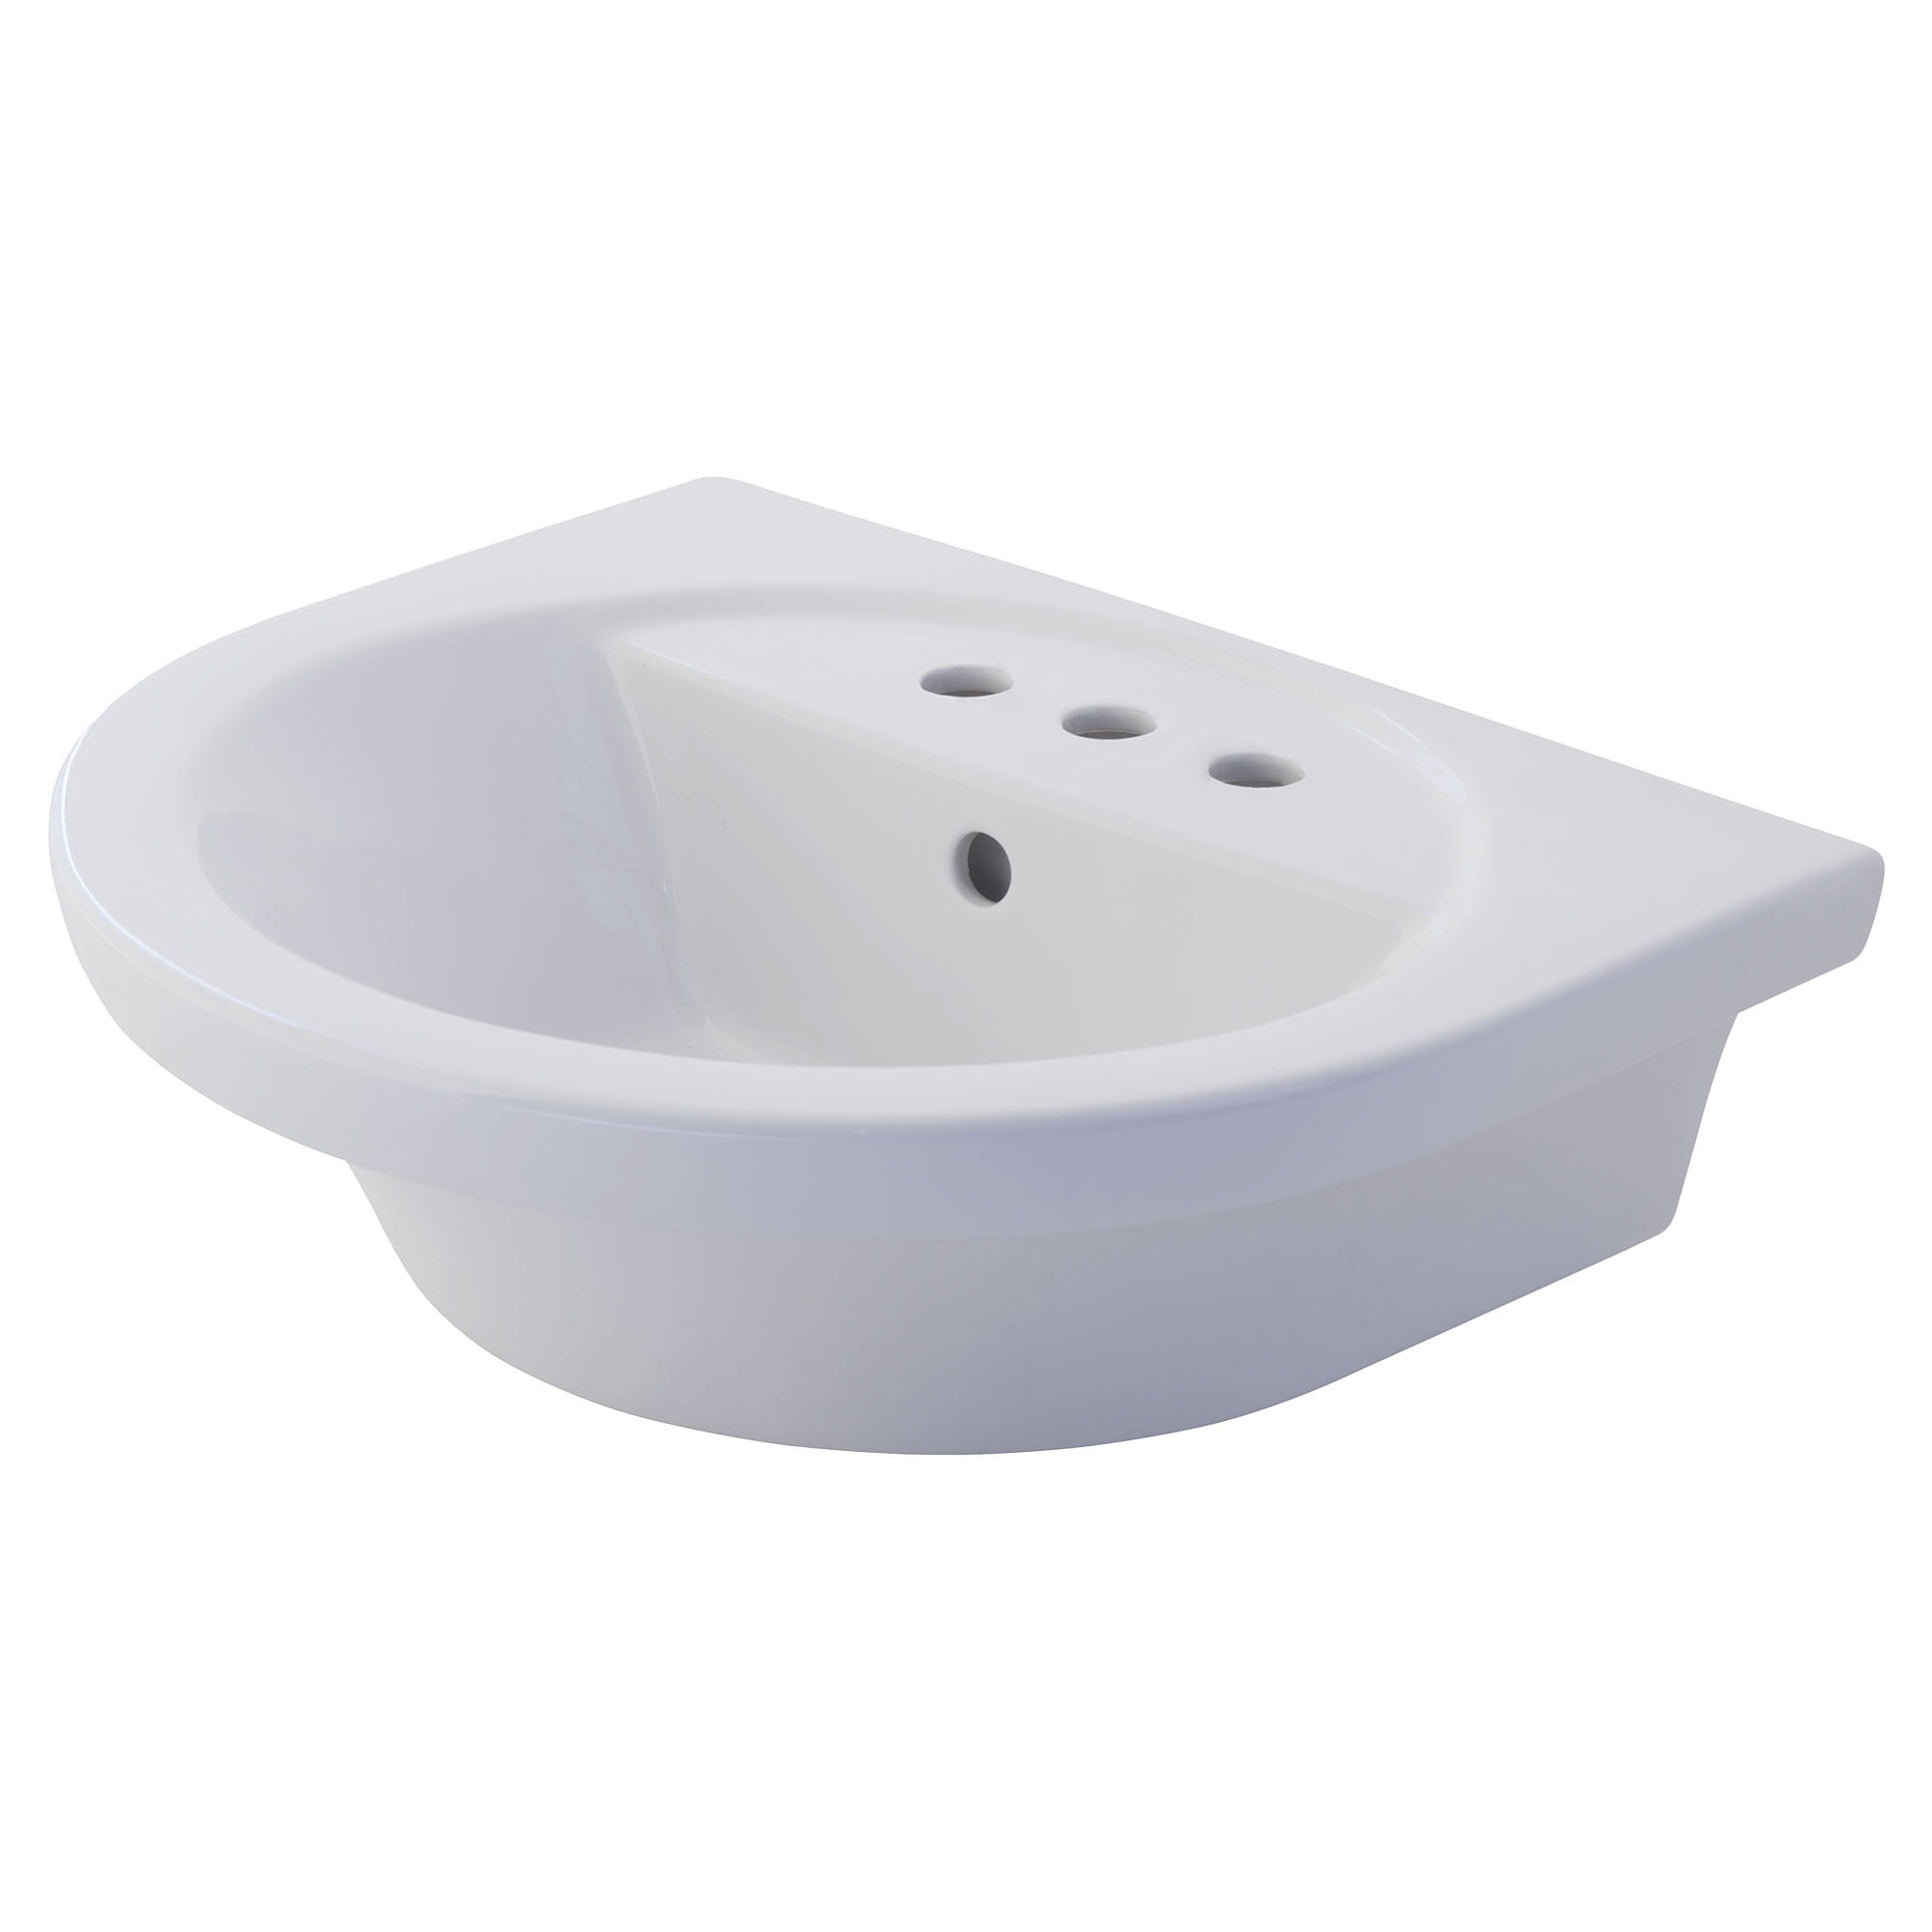 Tropic Petite 8 Inch Widespread Pedestal Sink Top WHITE